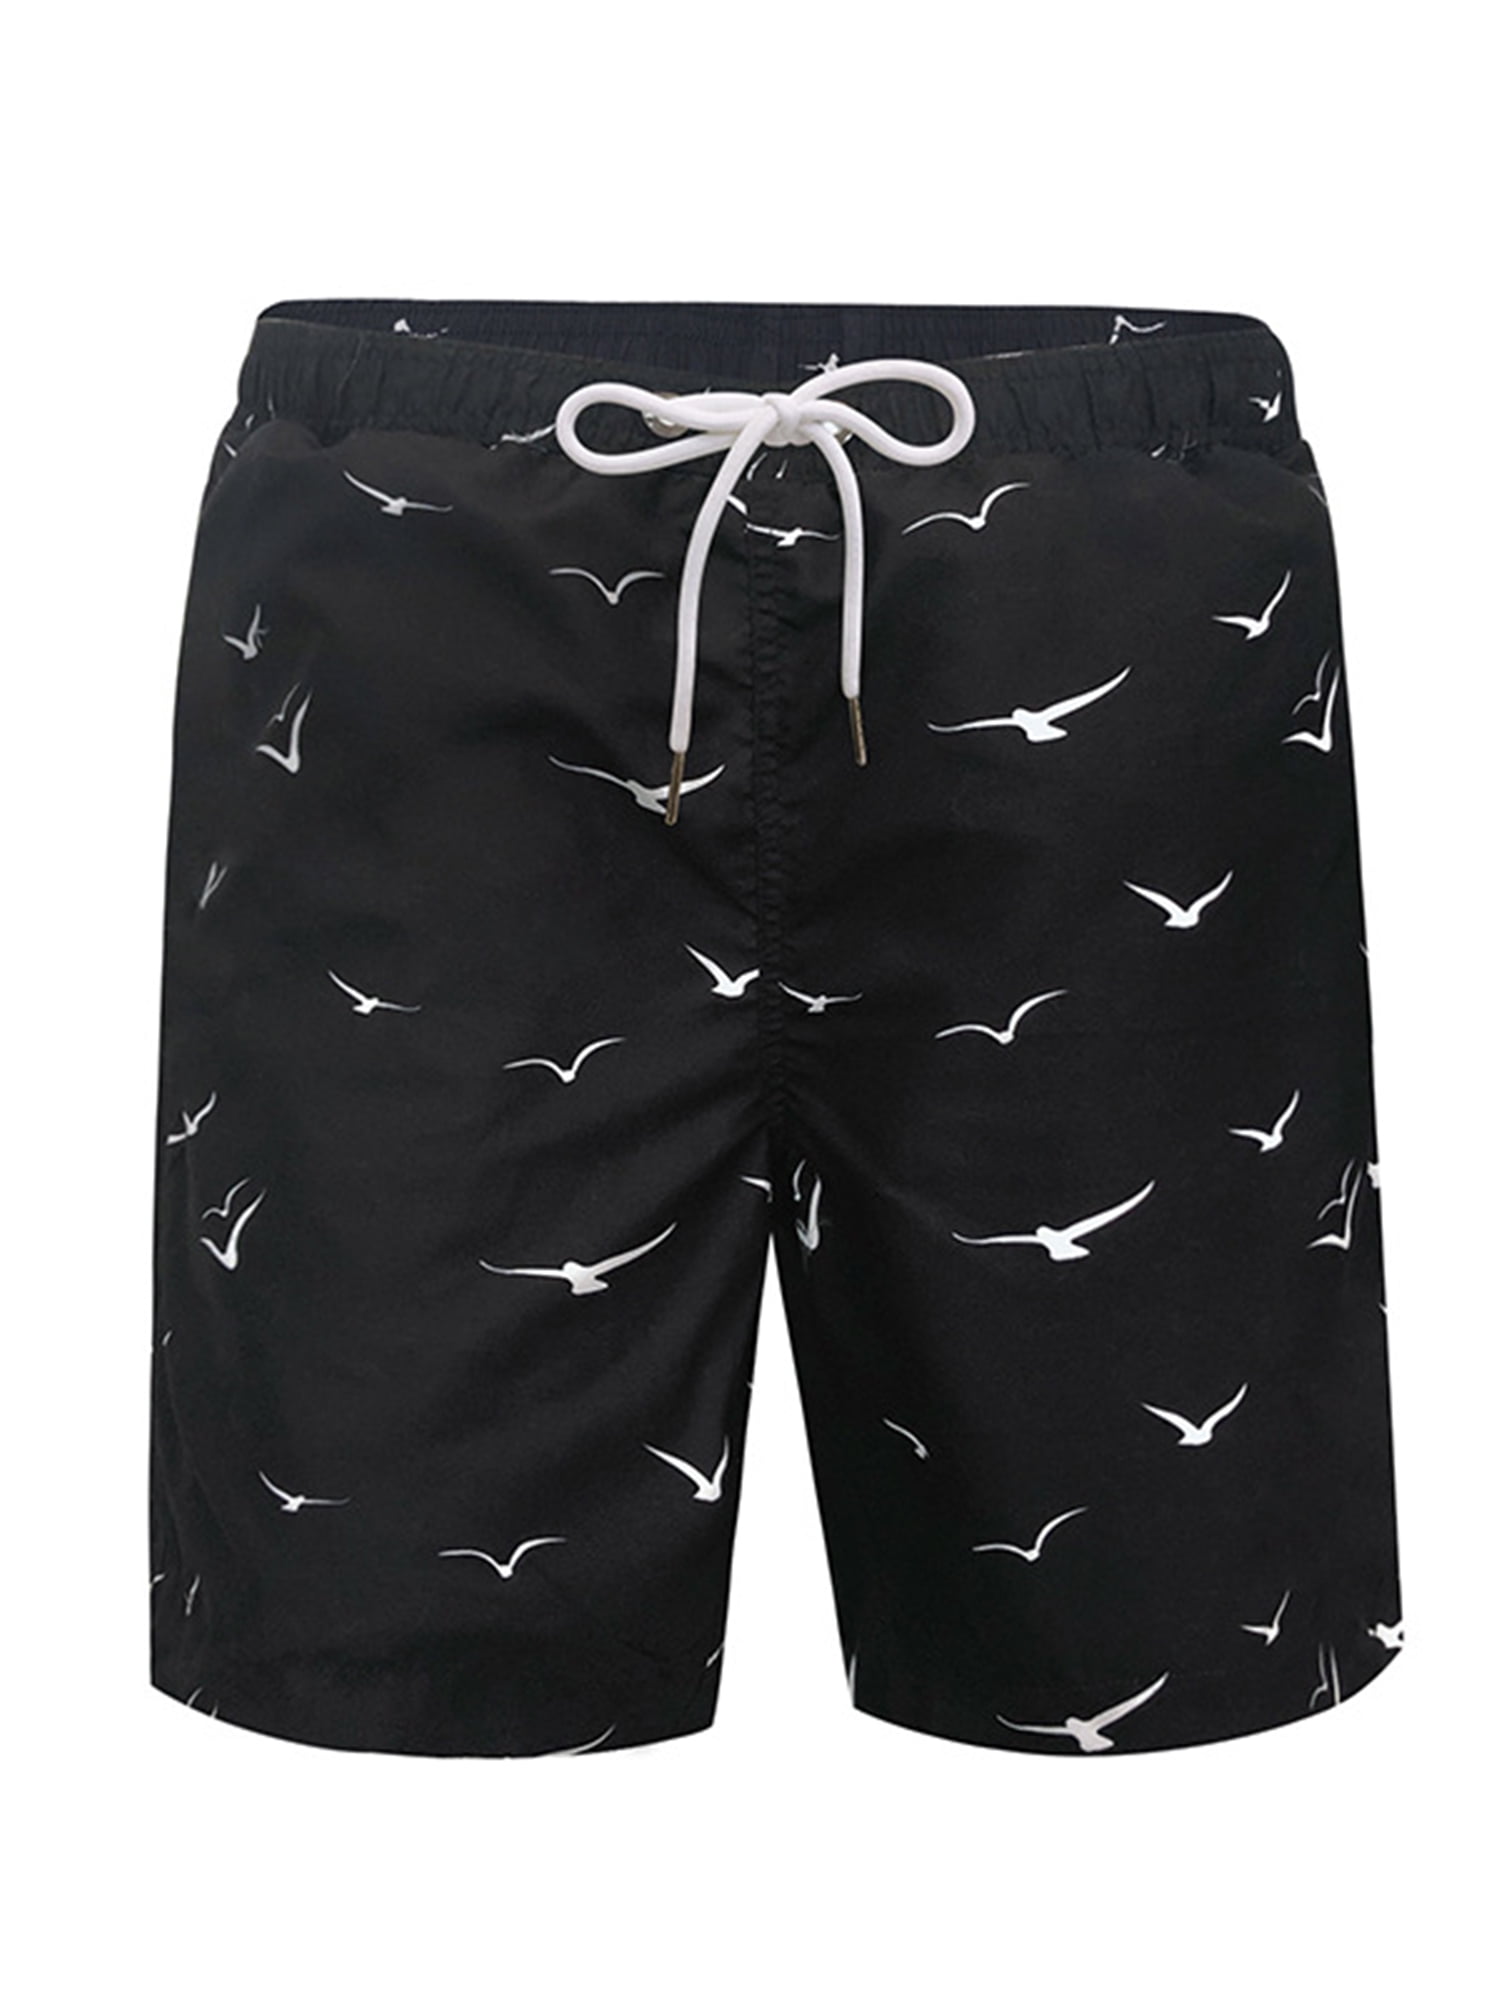 Beach Pants Men Swimwear Shorts Swimming Short with Plus Size M XL L XXL 